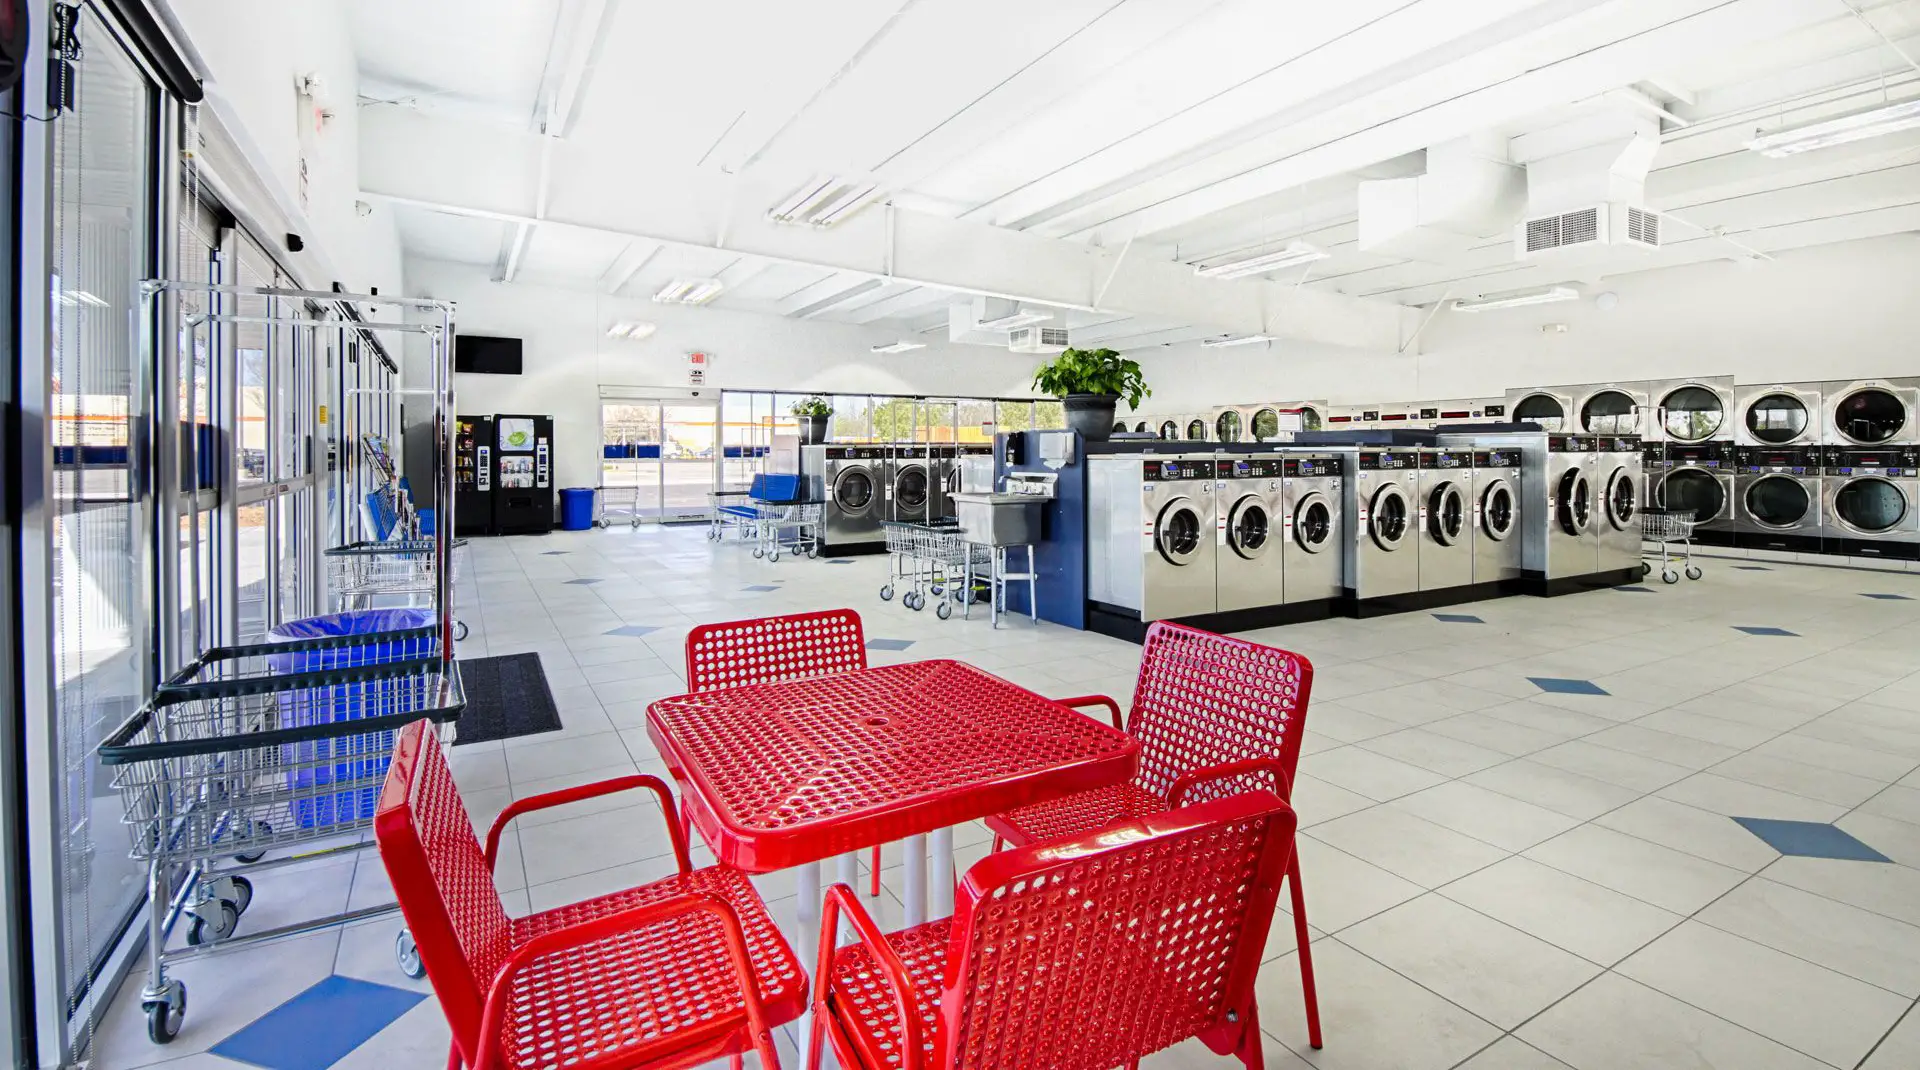 Self service shop. Self-service Laundry. Self-service Laundry Interior. Laundry shop. Instructions self-service Laundry.